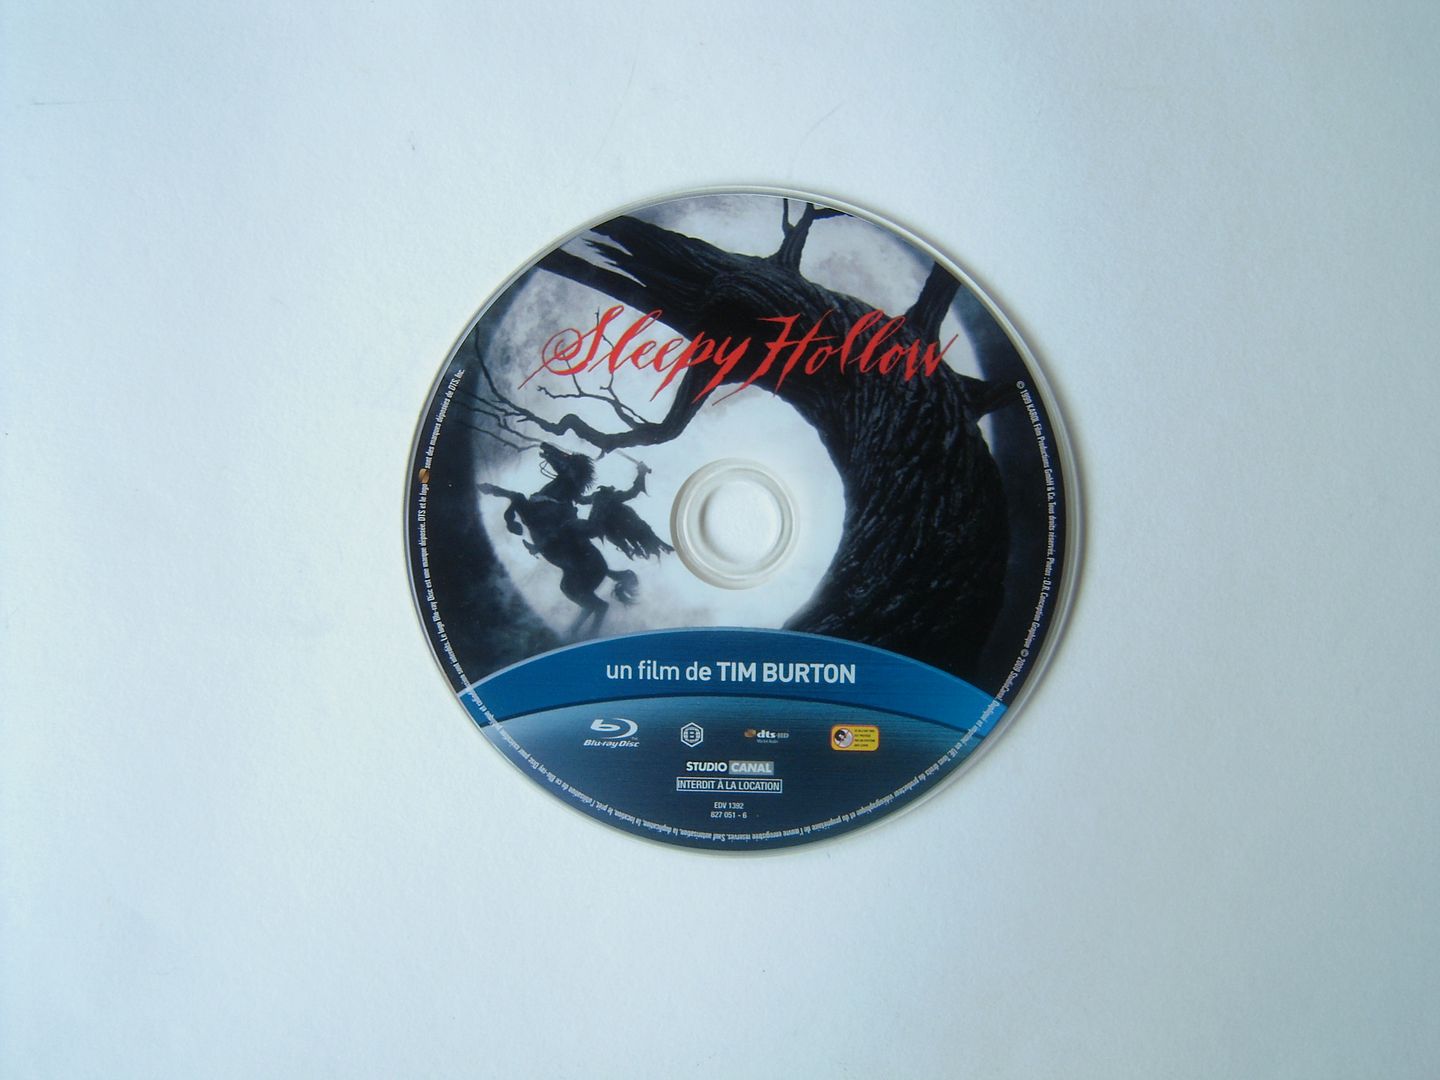 Sleepy Hollow - DVD/Bluray DSCN2307